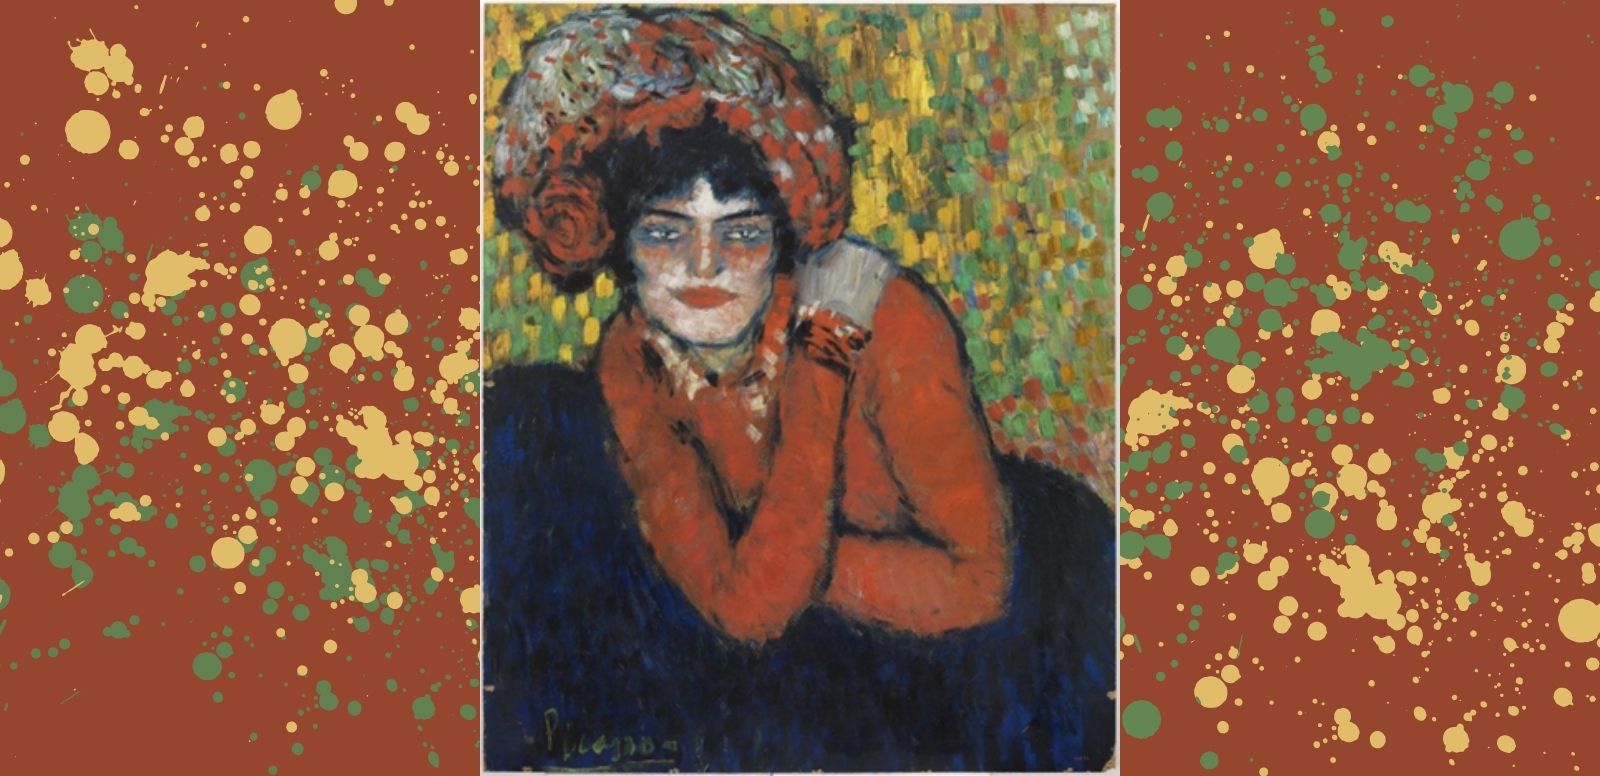 Pablo Picasso, “La espera (Margot)”, 1901